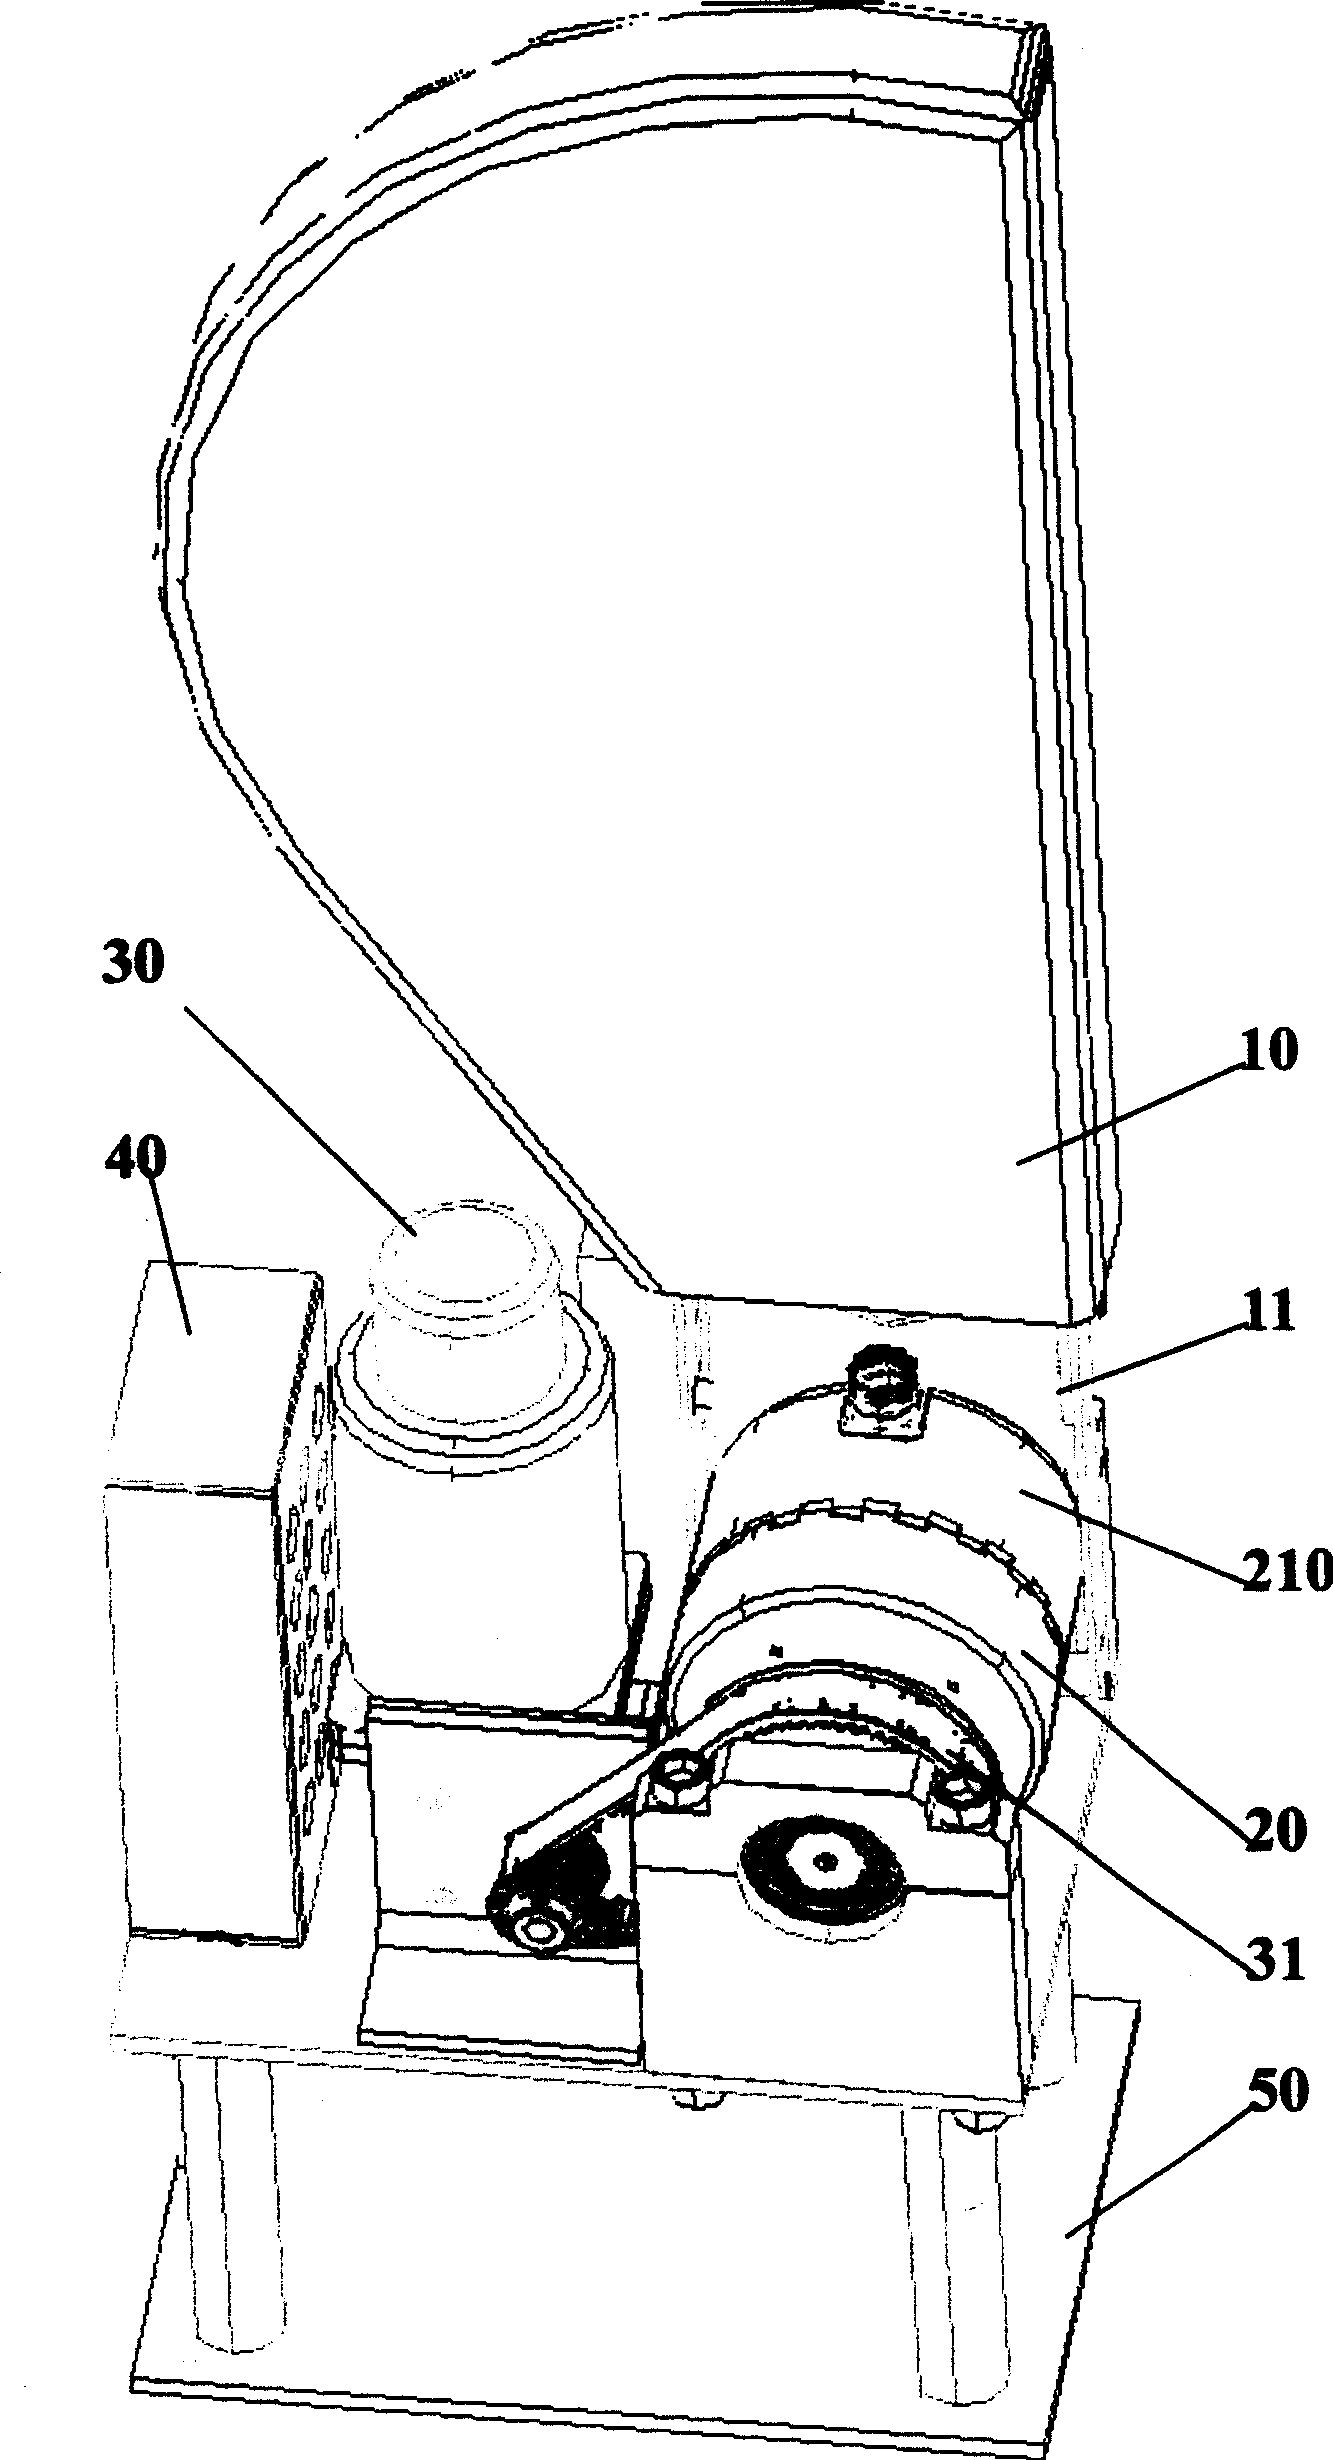 Mechanism of blocking automatic fan-shaped door